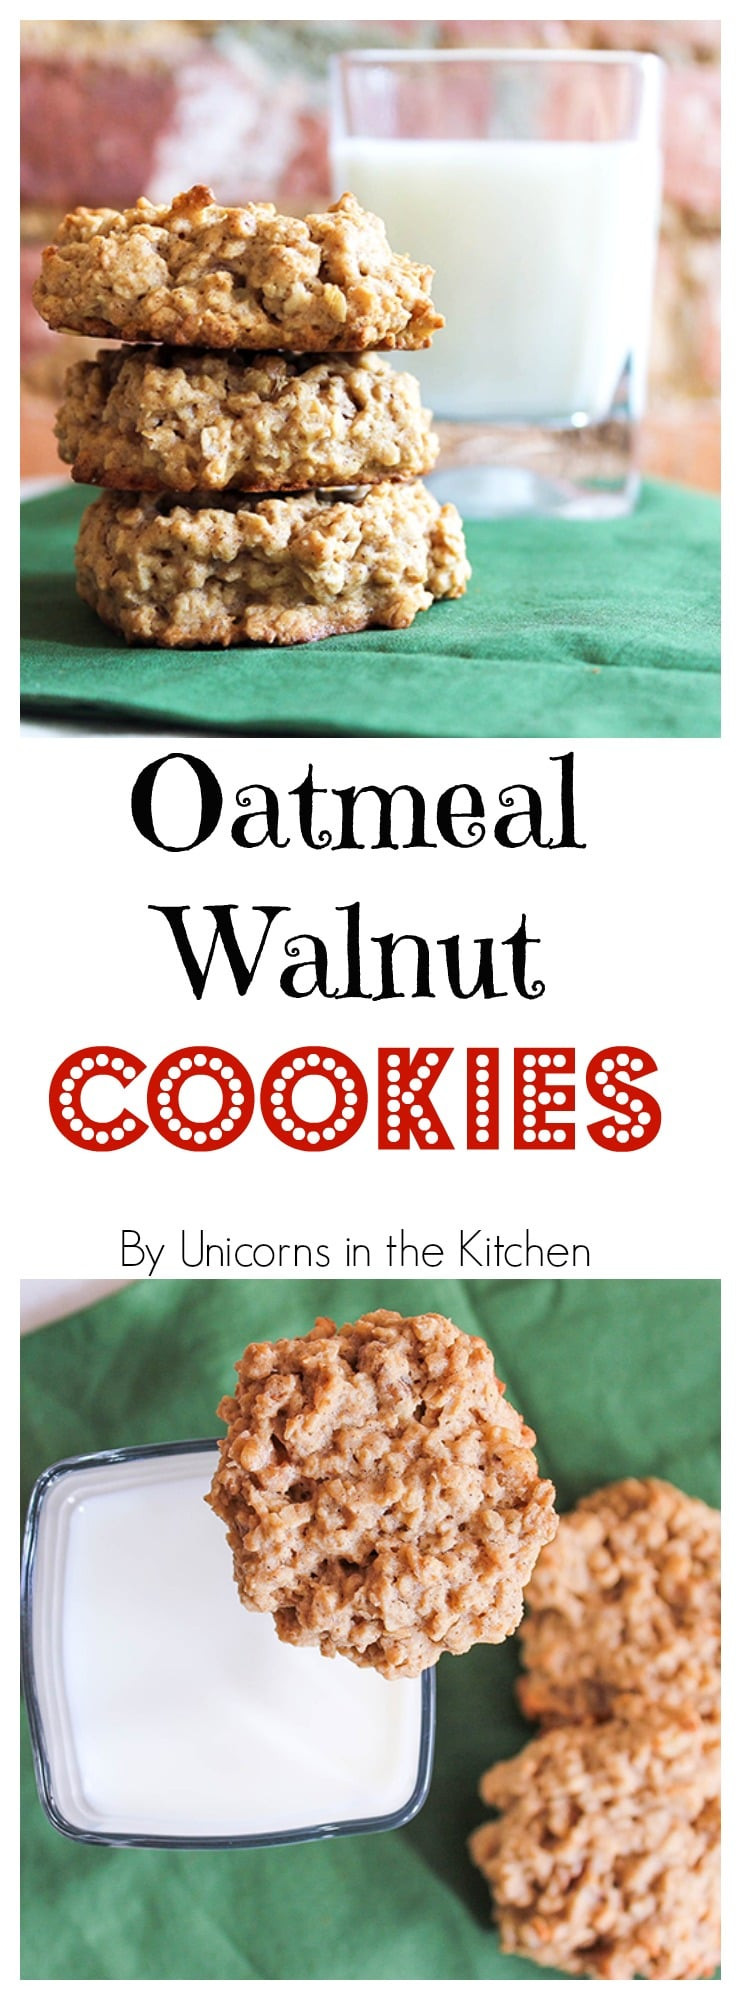 Oatmeal Walnut Cookies
 The Best Oatmeal Walnut Cookies • Unicorns in the Kitchen